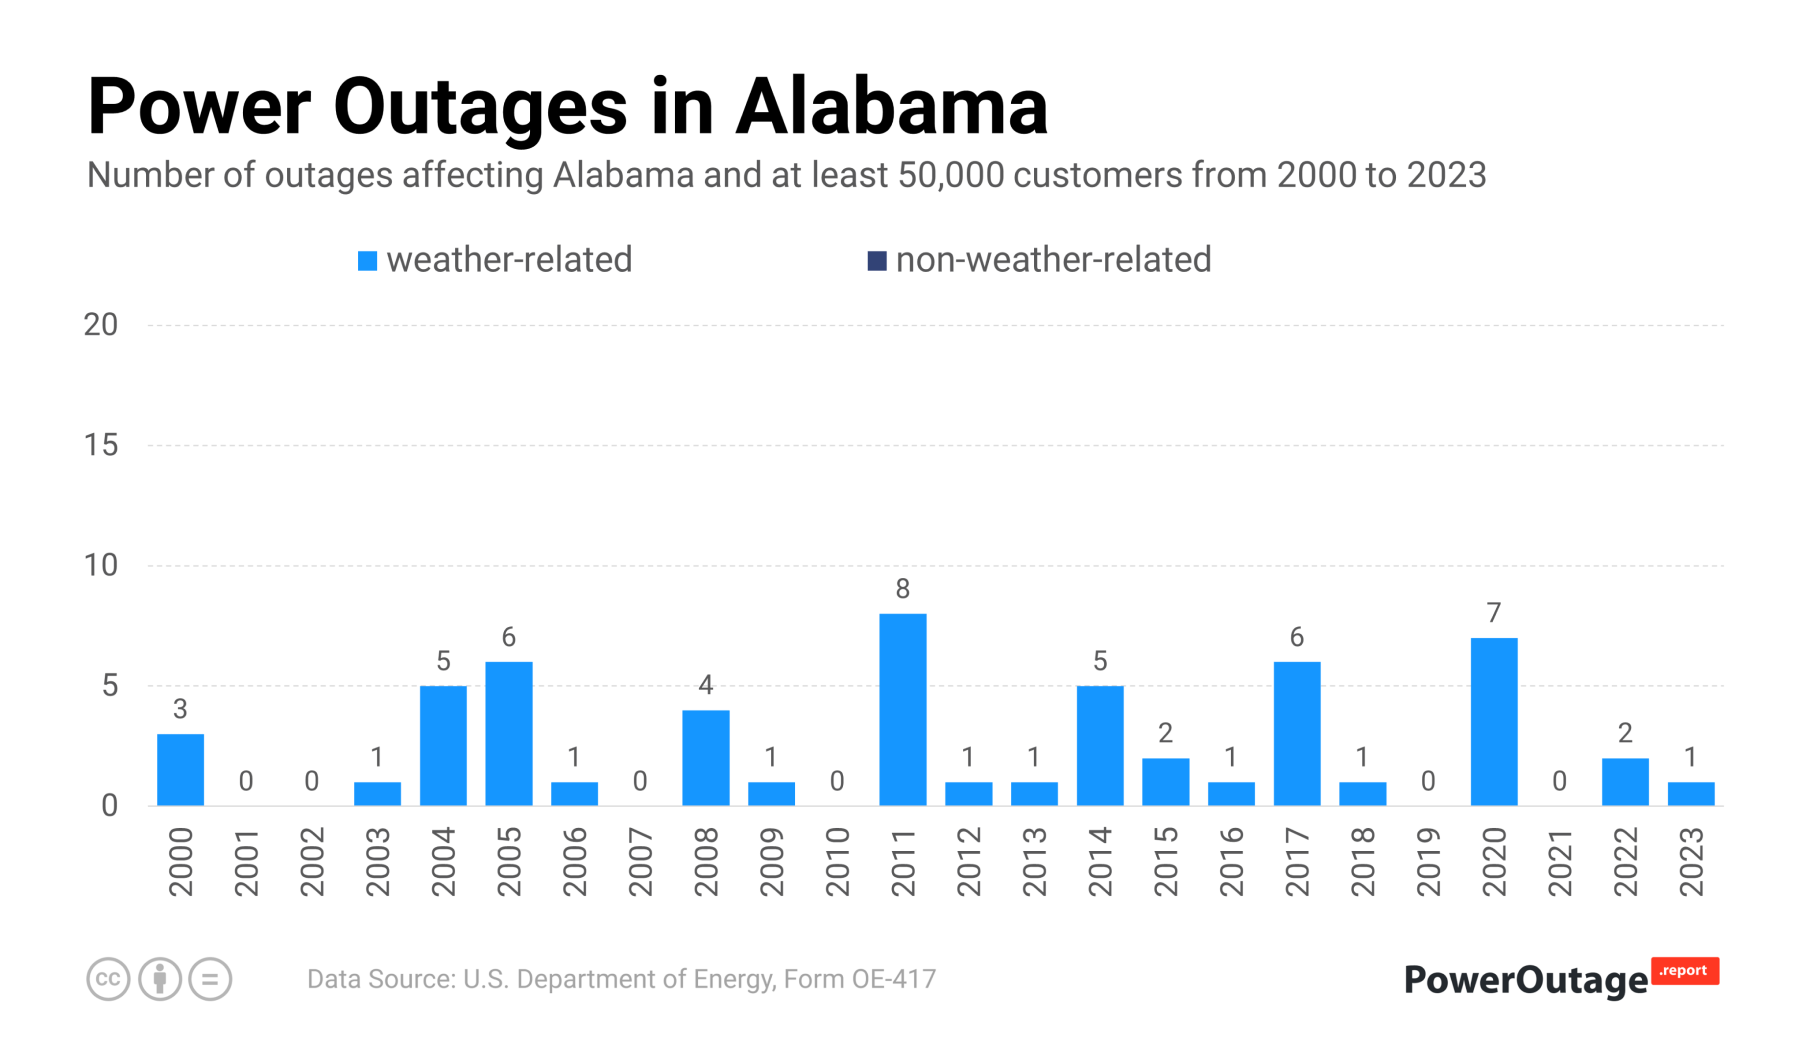 Alabama Power Outage Statistics (2000 - 2022)